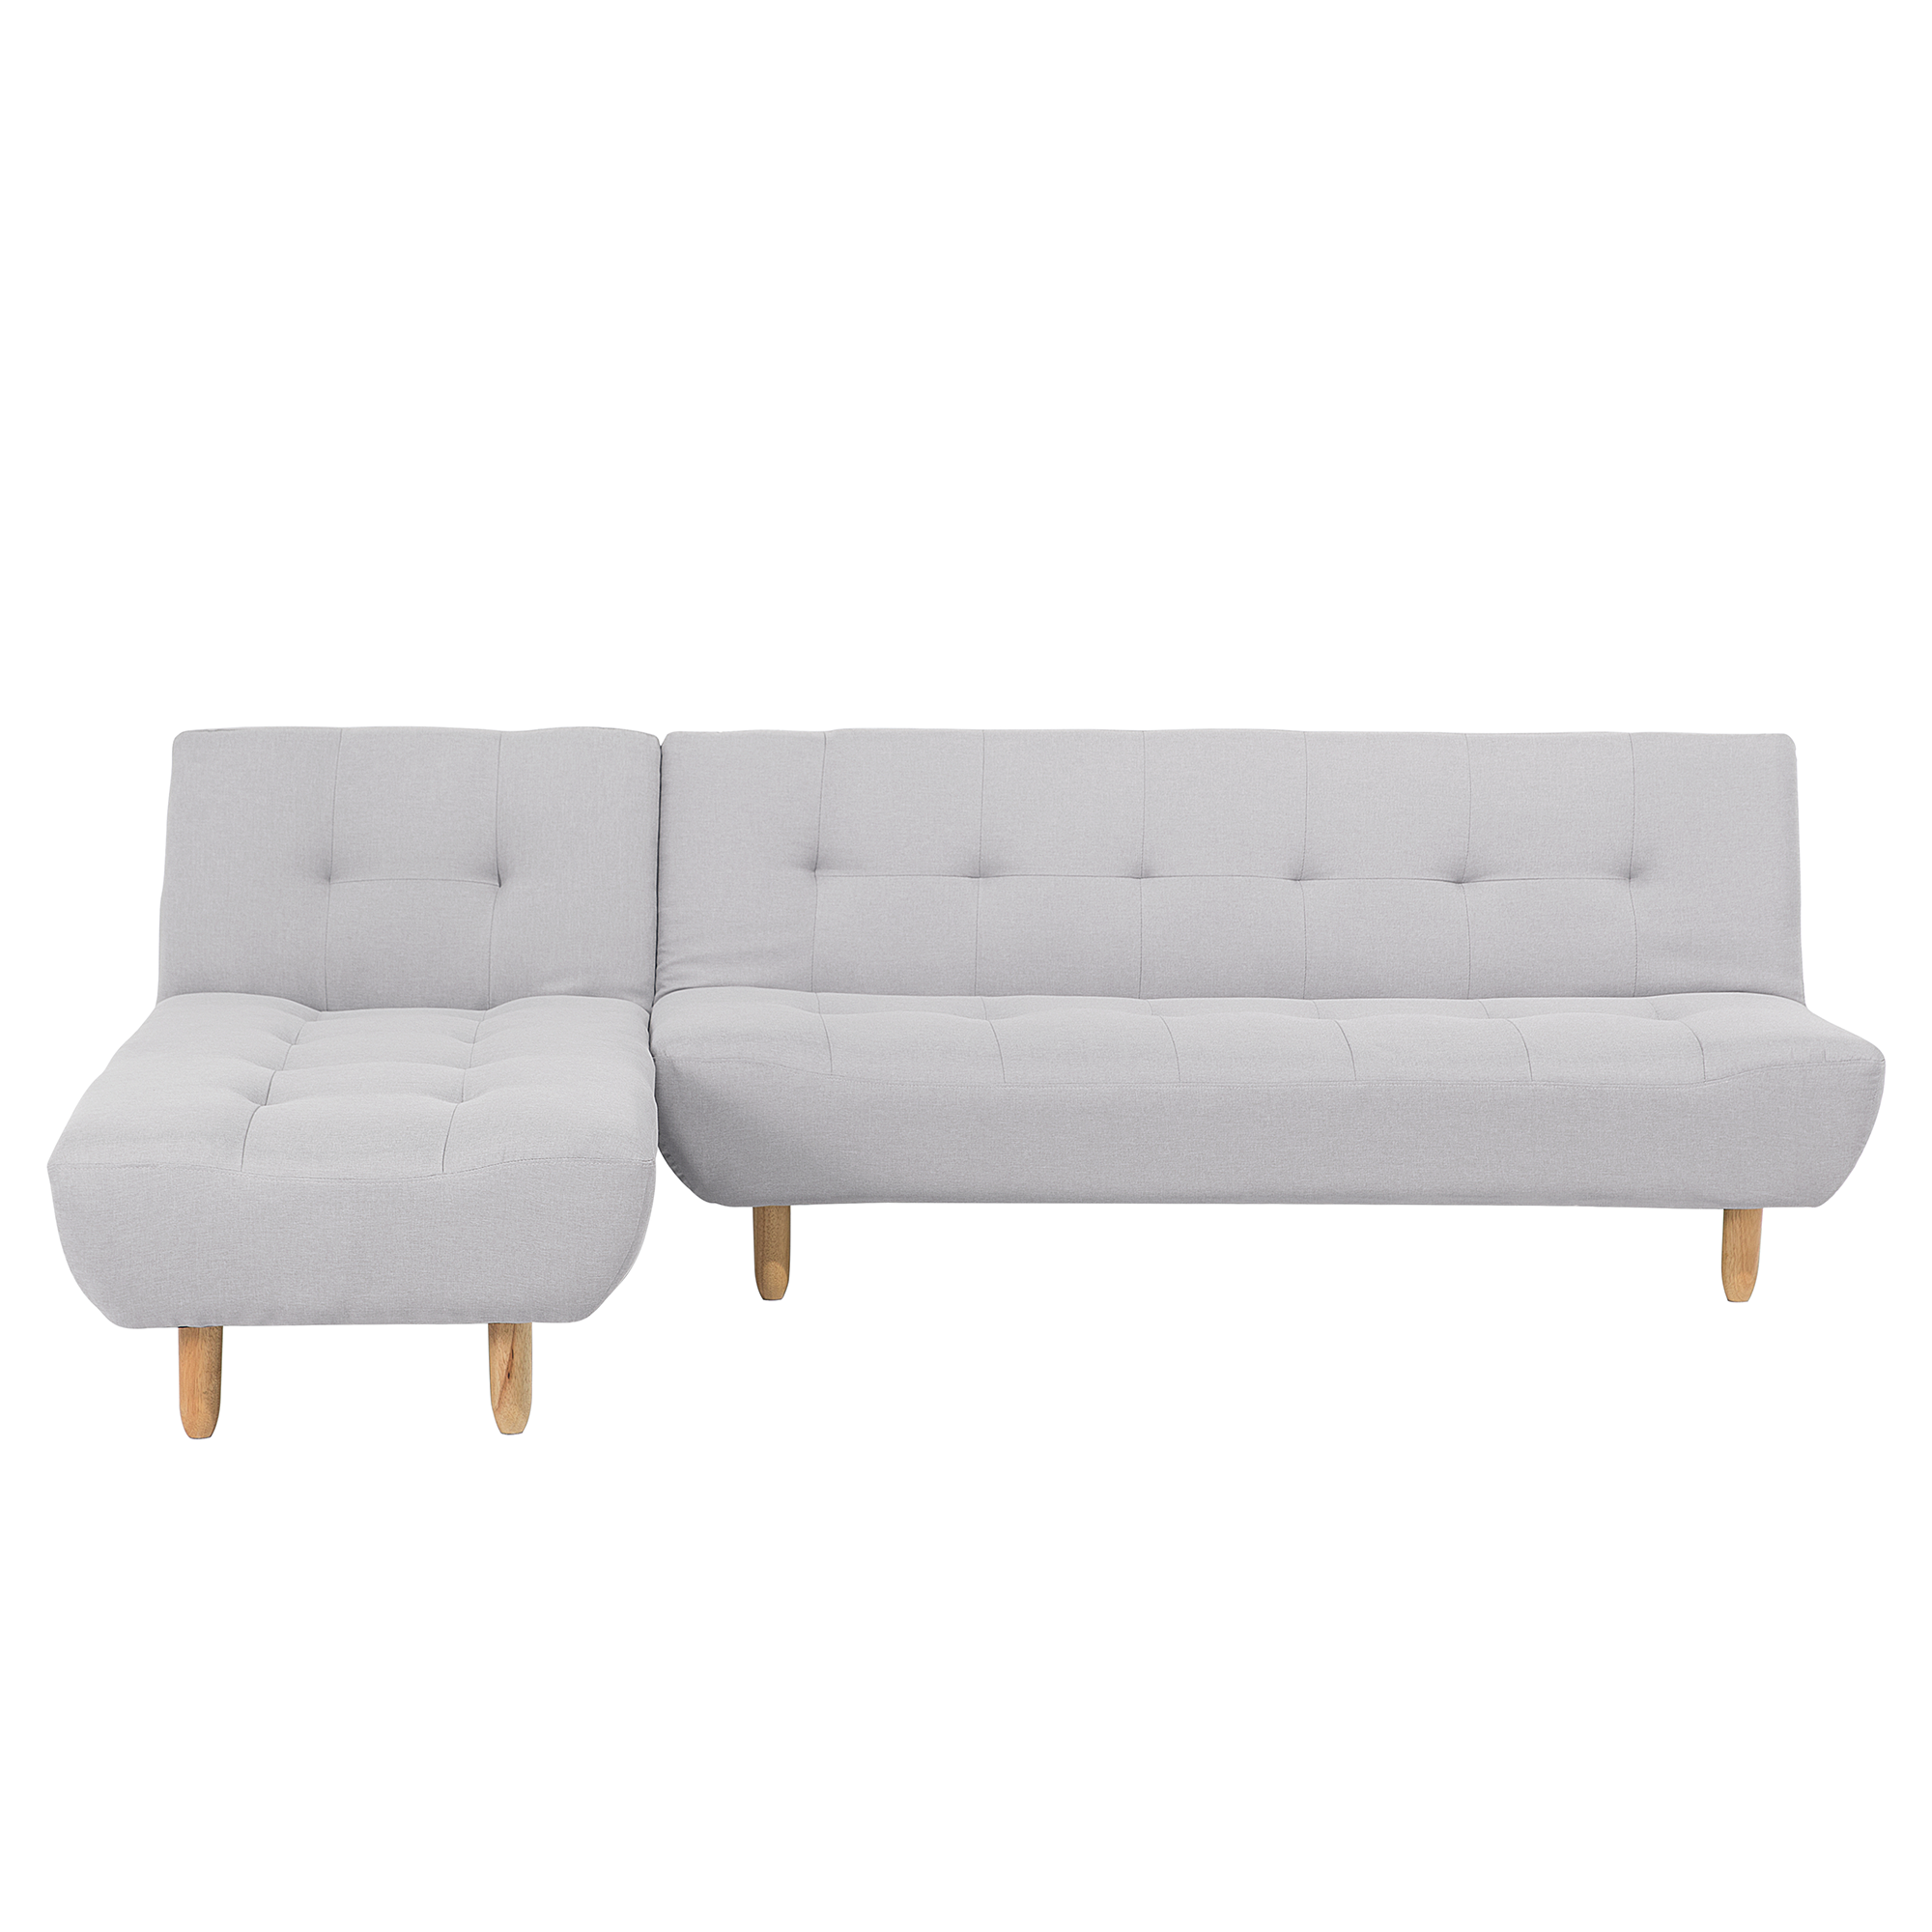 Beliani Corner Sofa Light Grey Fabric Upholsery Light Wood Legs Right Hand Chaise Longue 3 Seater